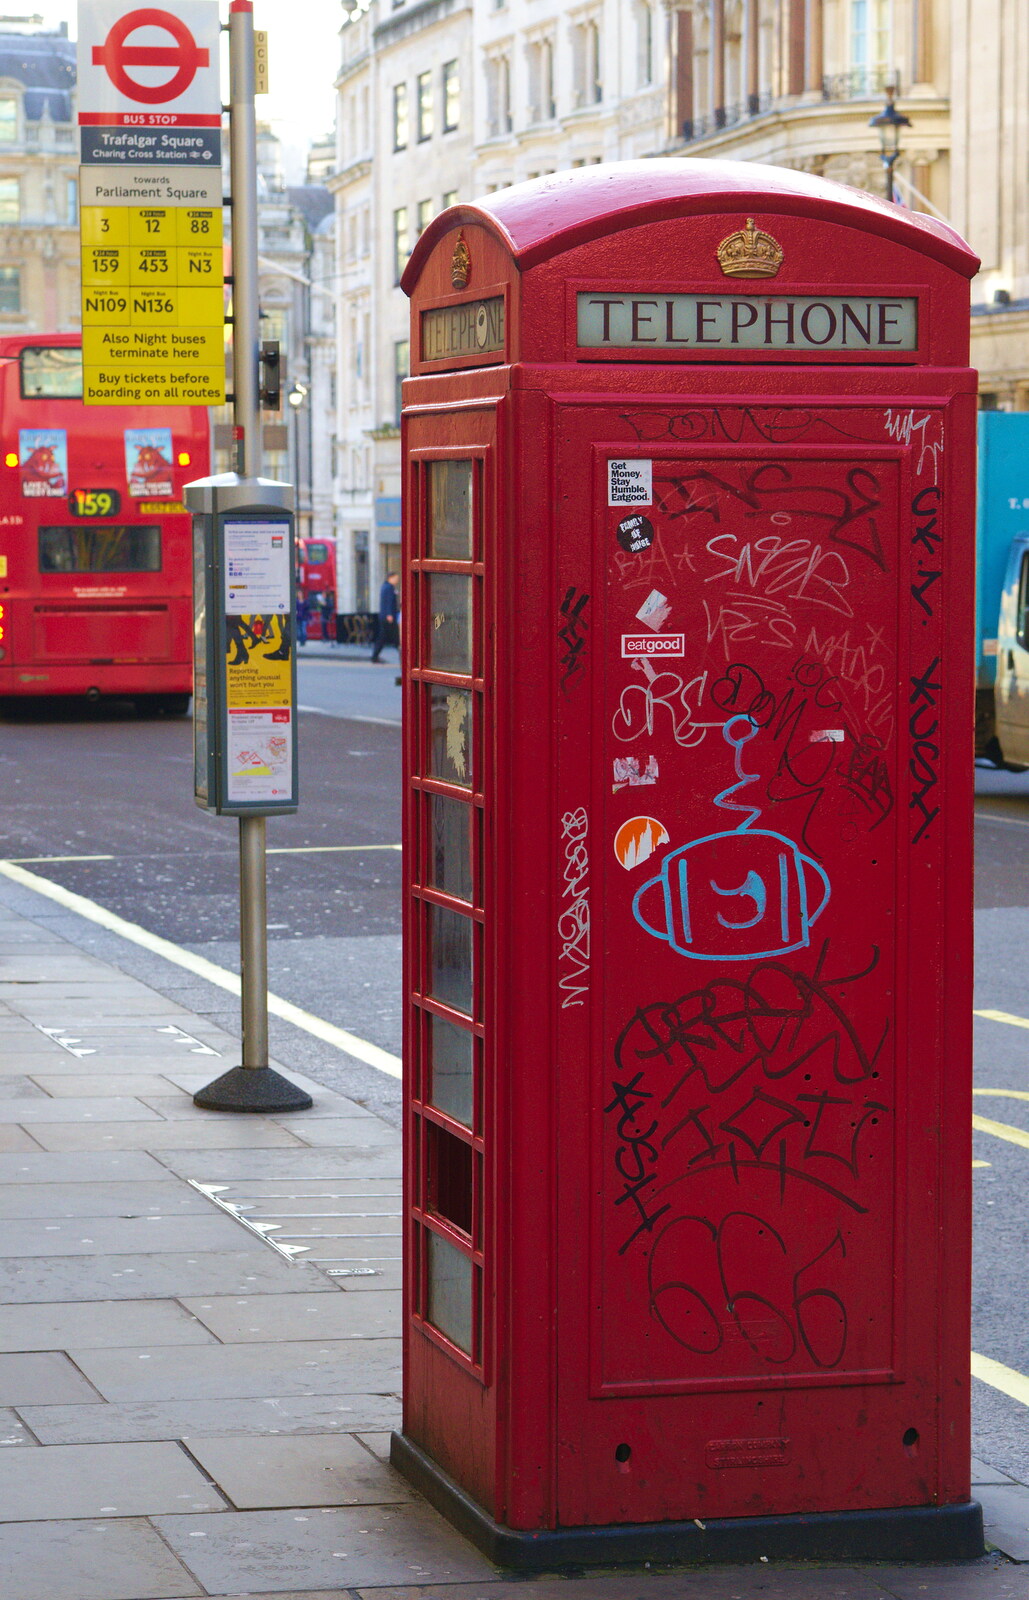 A vandalised K6 phone box from SwiftKey Innovation, The Hub, Westminster, London - 21st February 2014